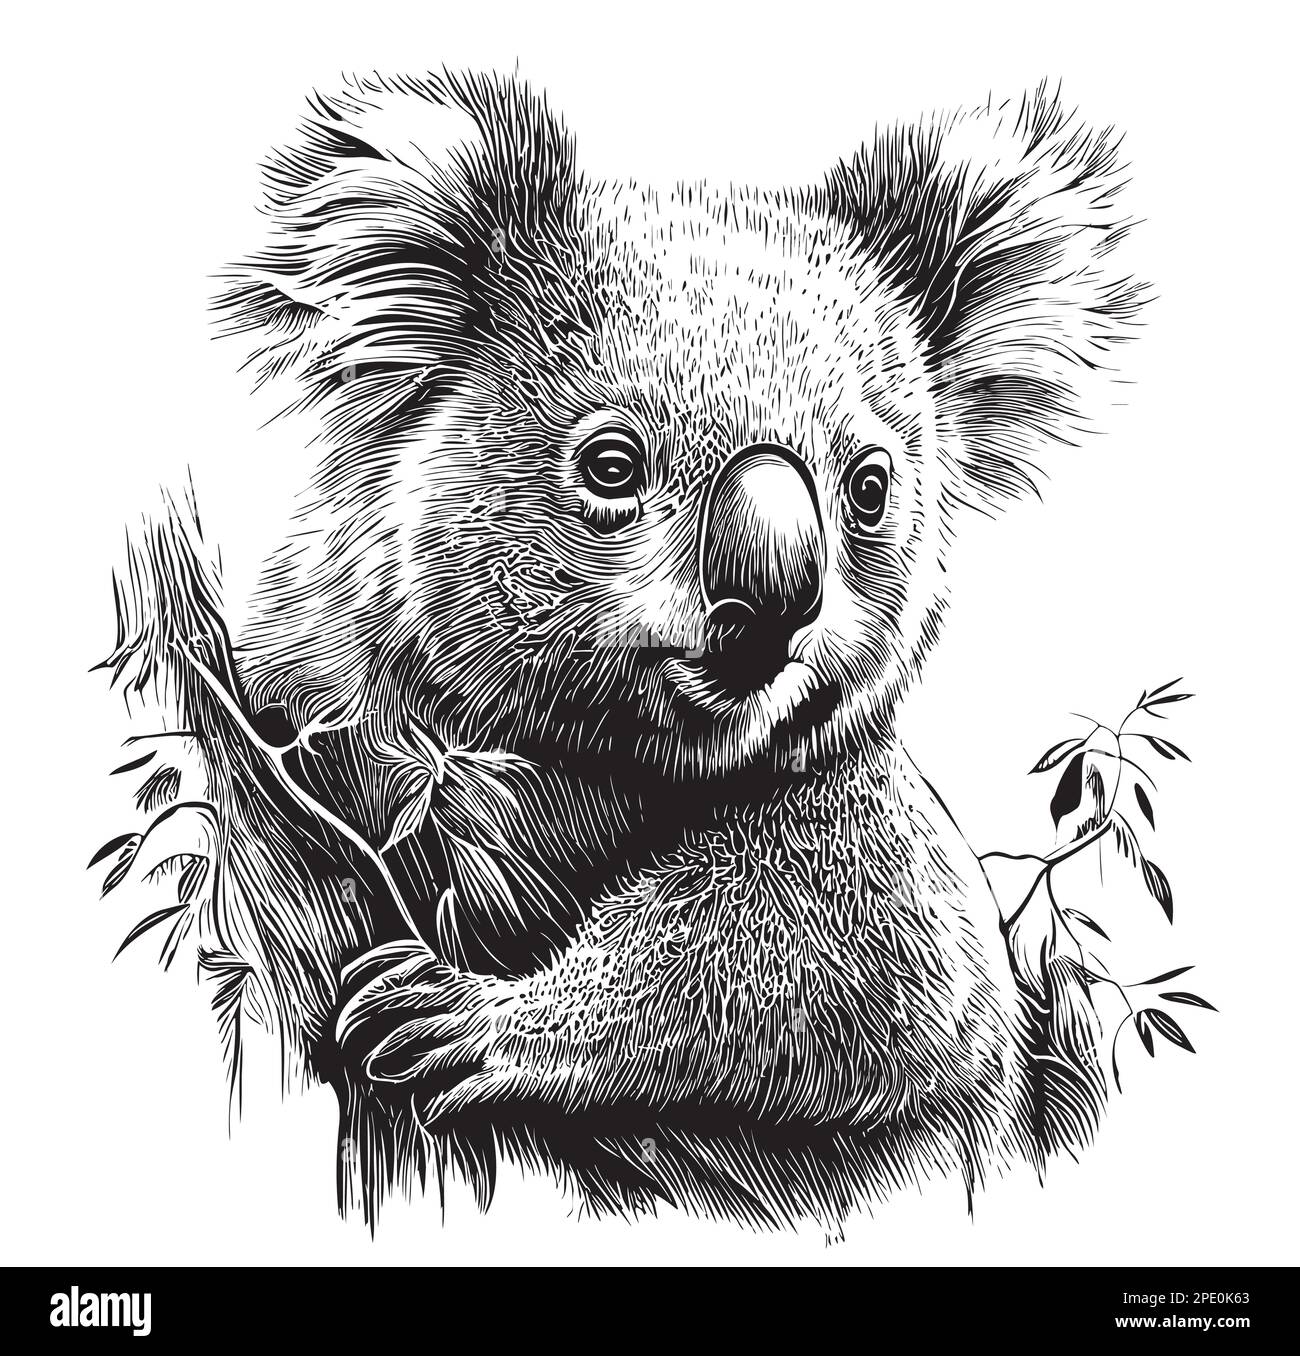 https://c8.alamy.com/comp/2PE0K63/koala-portrait-hand-drawn-sketch-illustration-wild-animals-2PE0K63.jpg